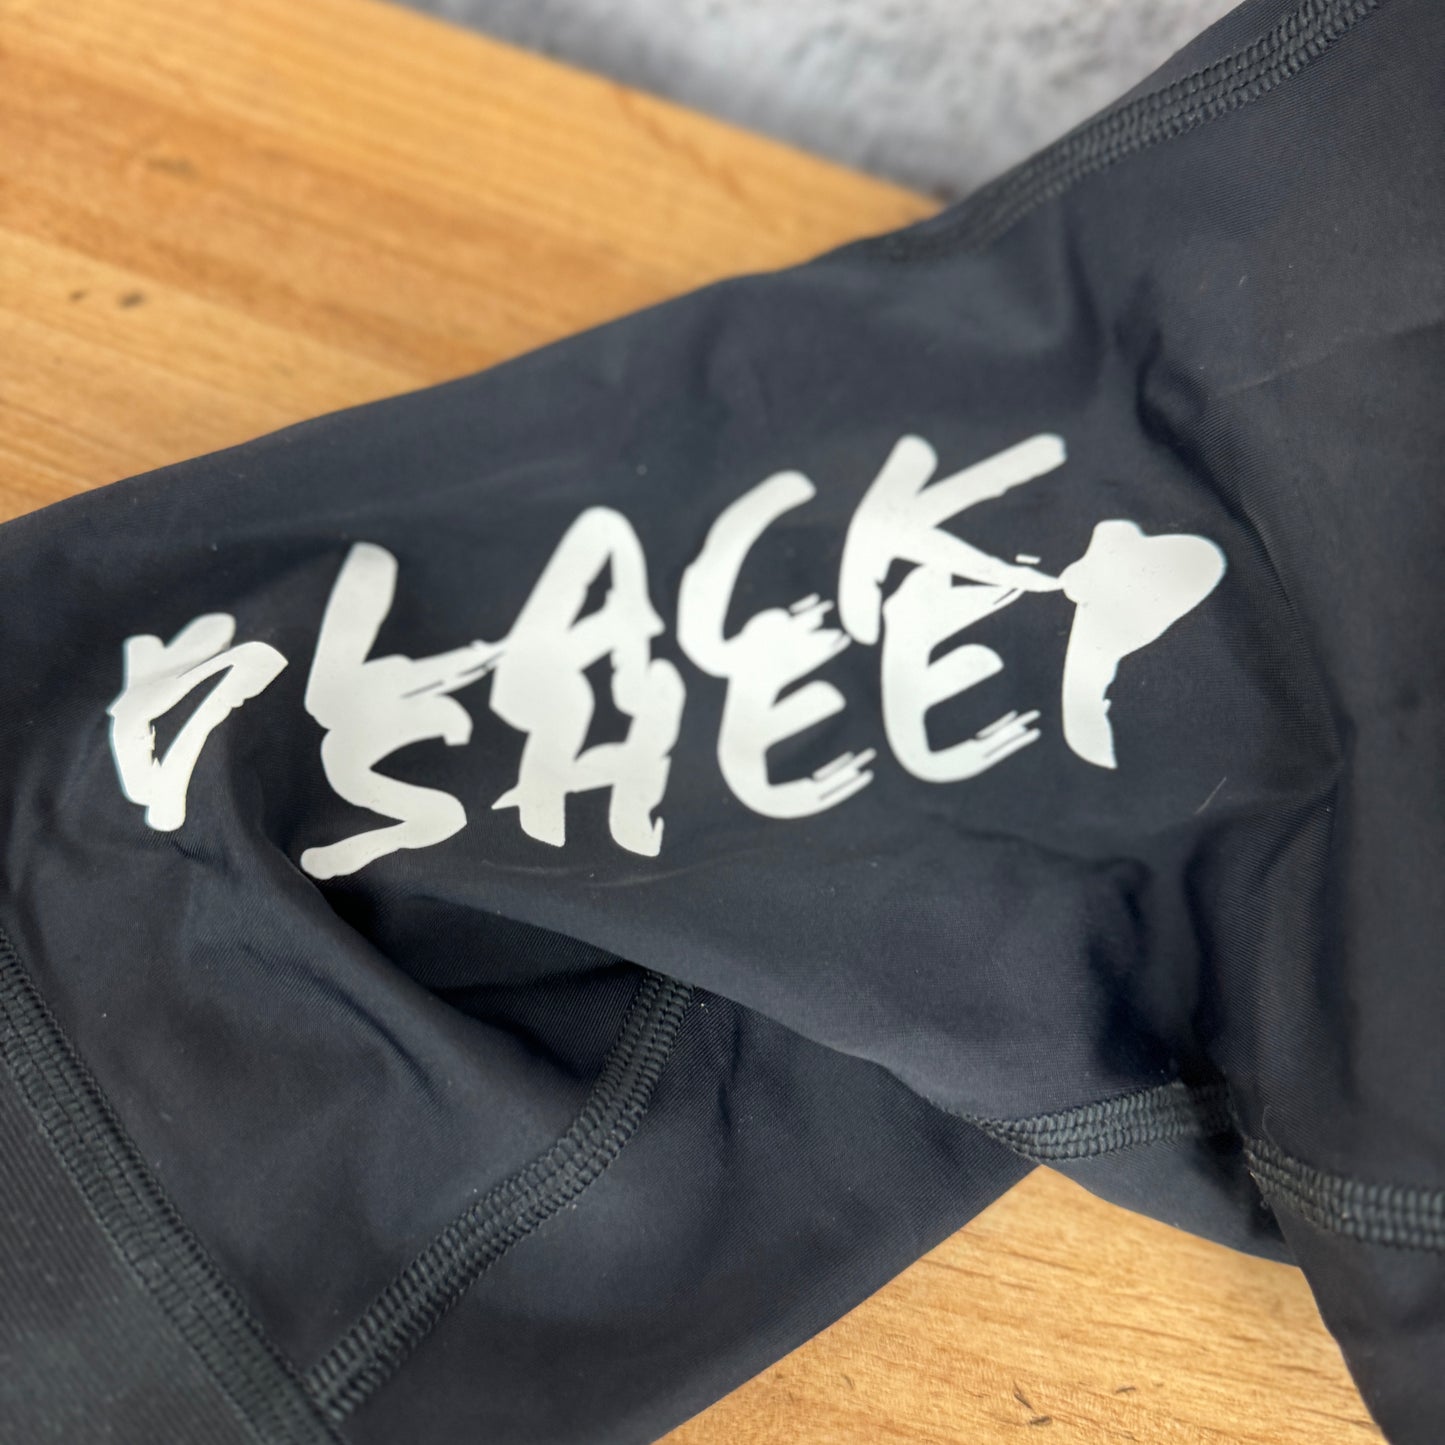 Black Sheep Essentials LTD Men's Medium Black/White Cycling Bib Shorts